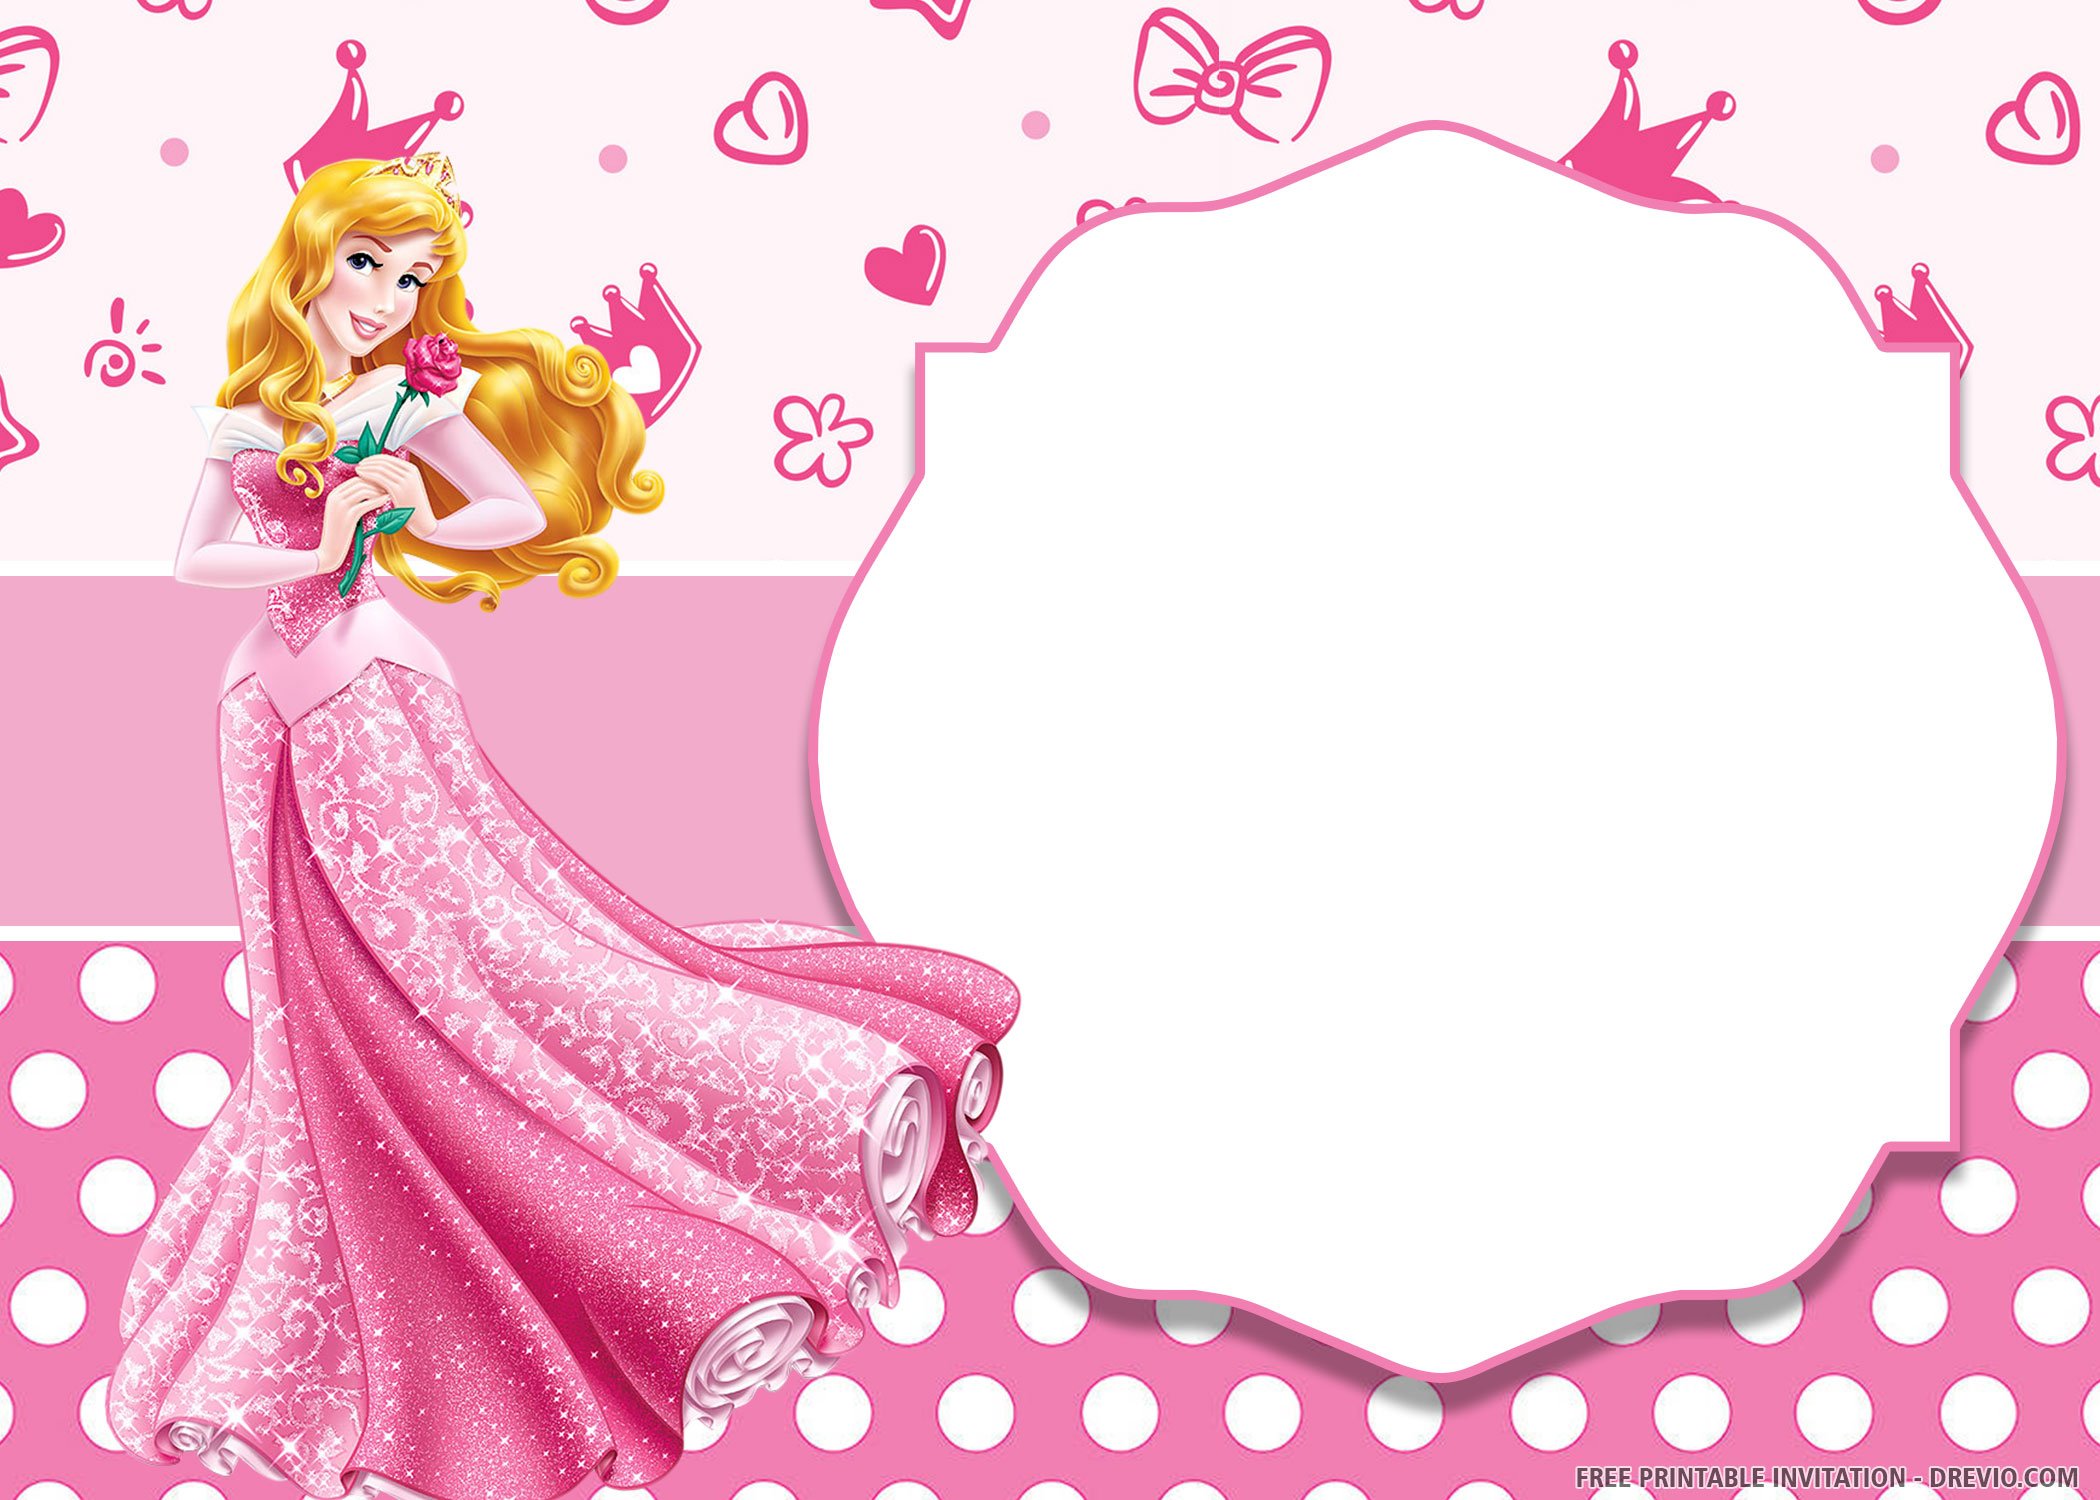 Free Printable Beautiful Princess Invitation TemplatesFREE PRINTABLE Birthday Invitation